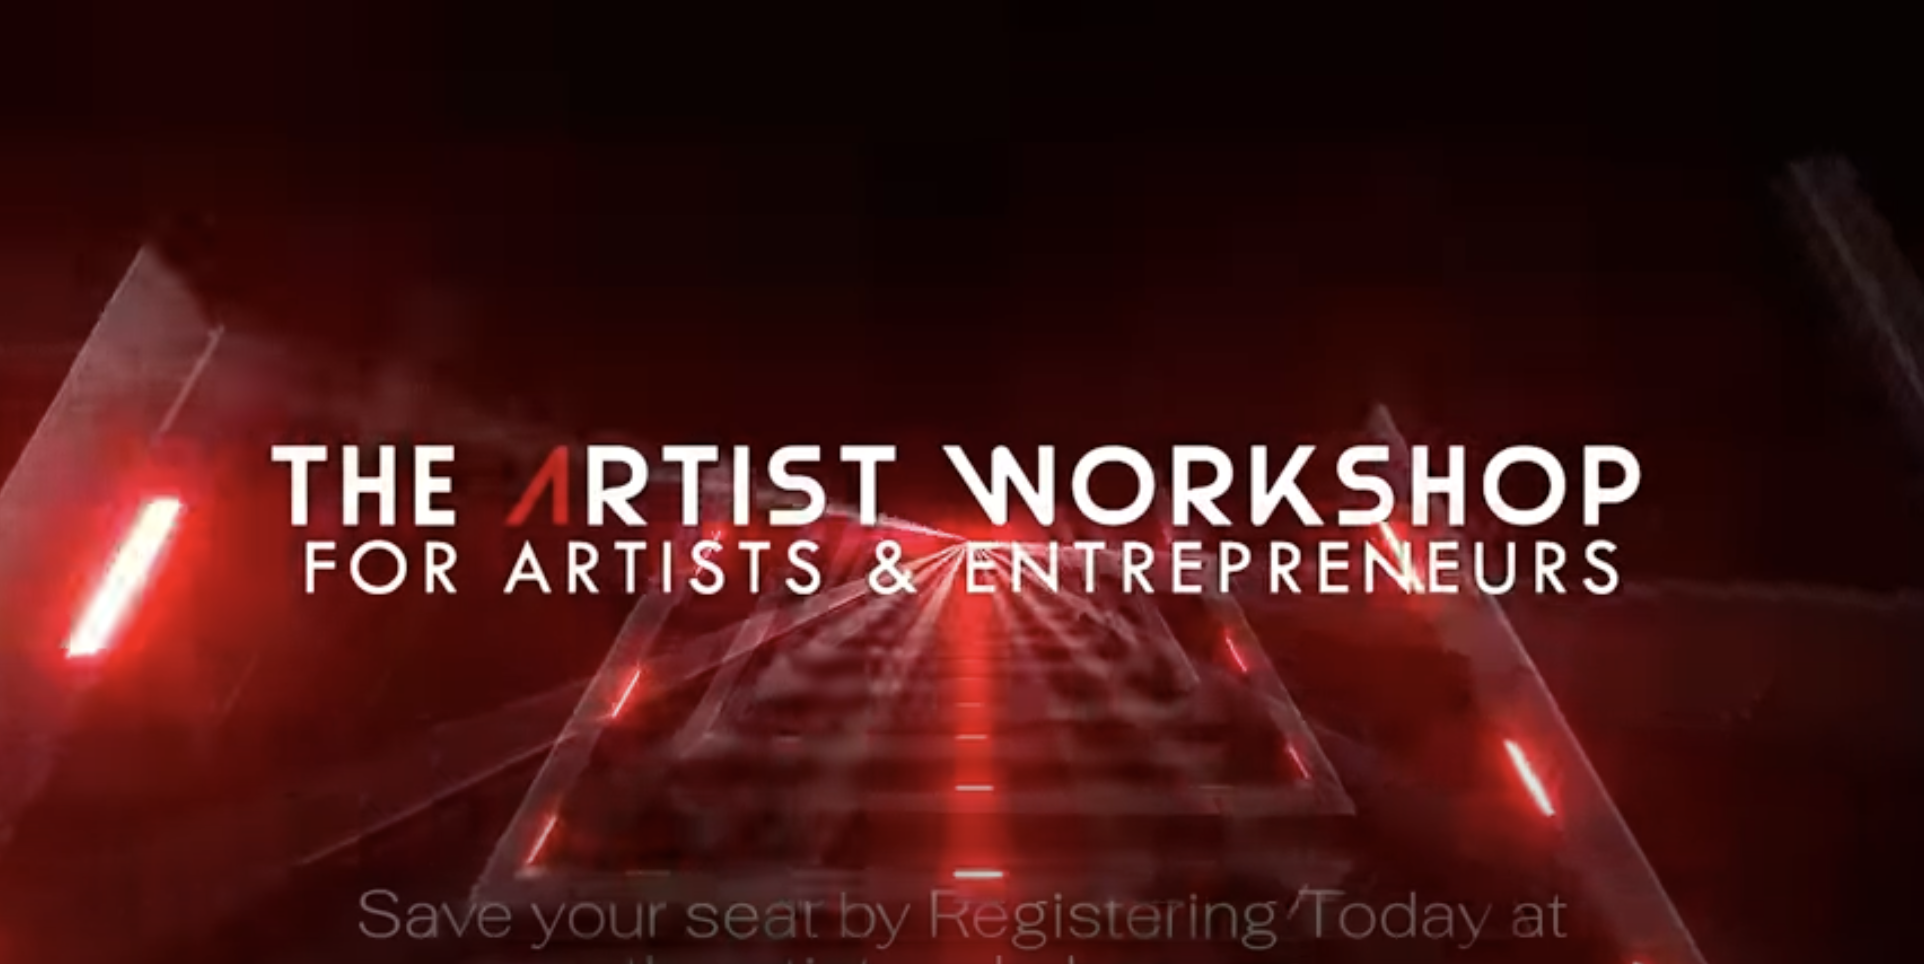 The Artist Workshop Promo Video